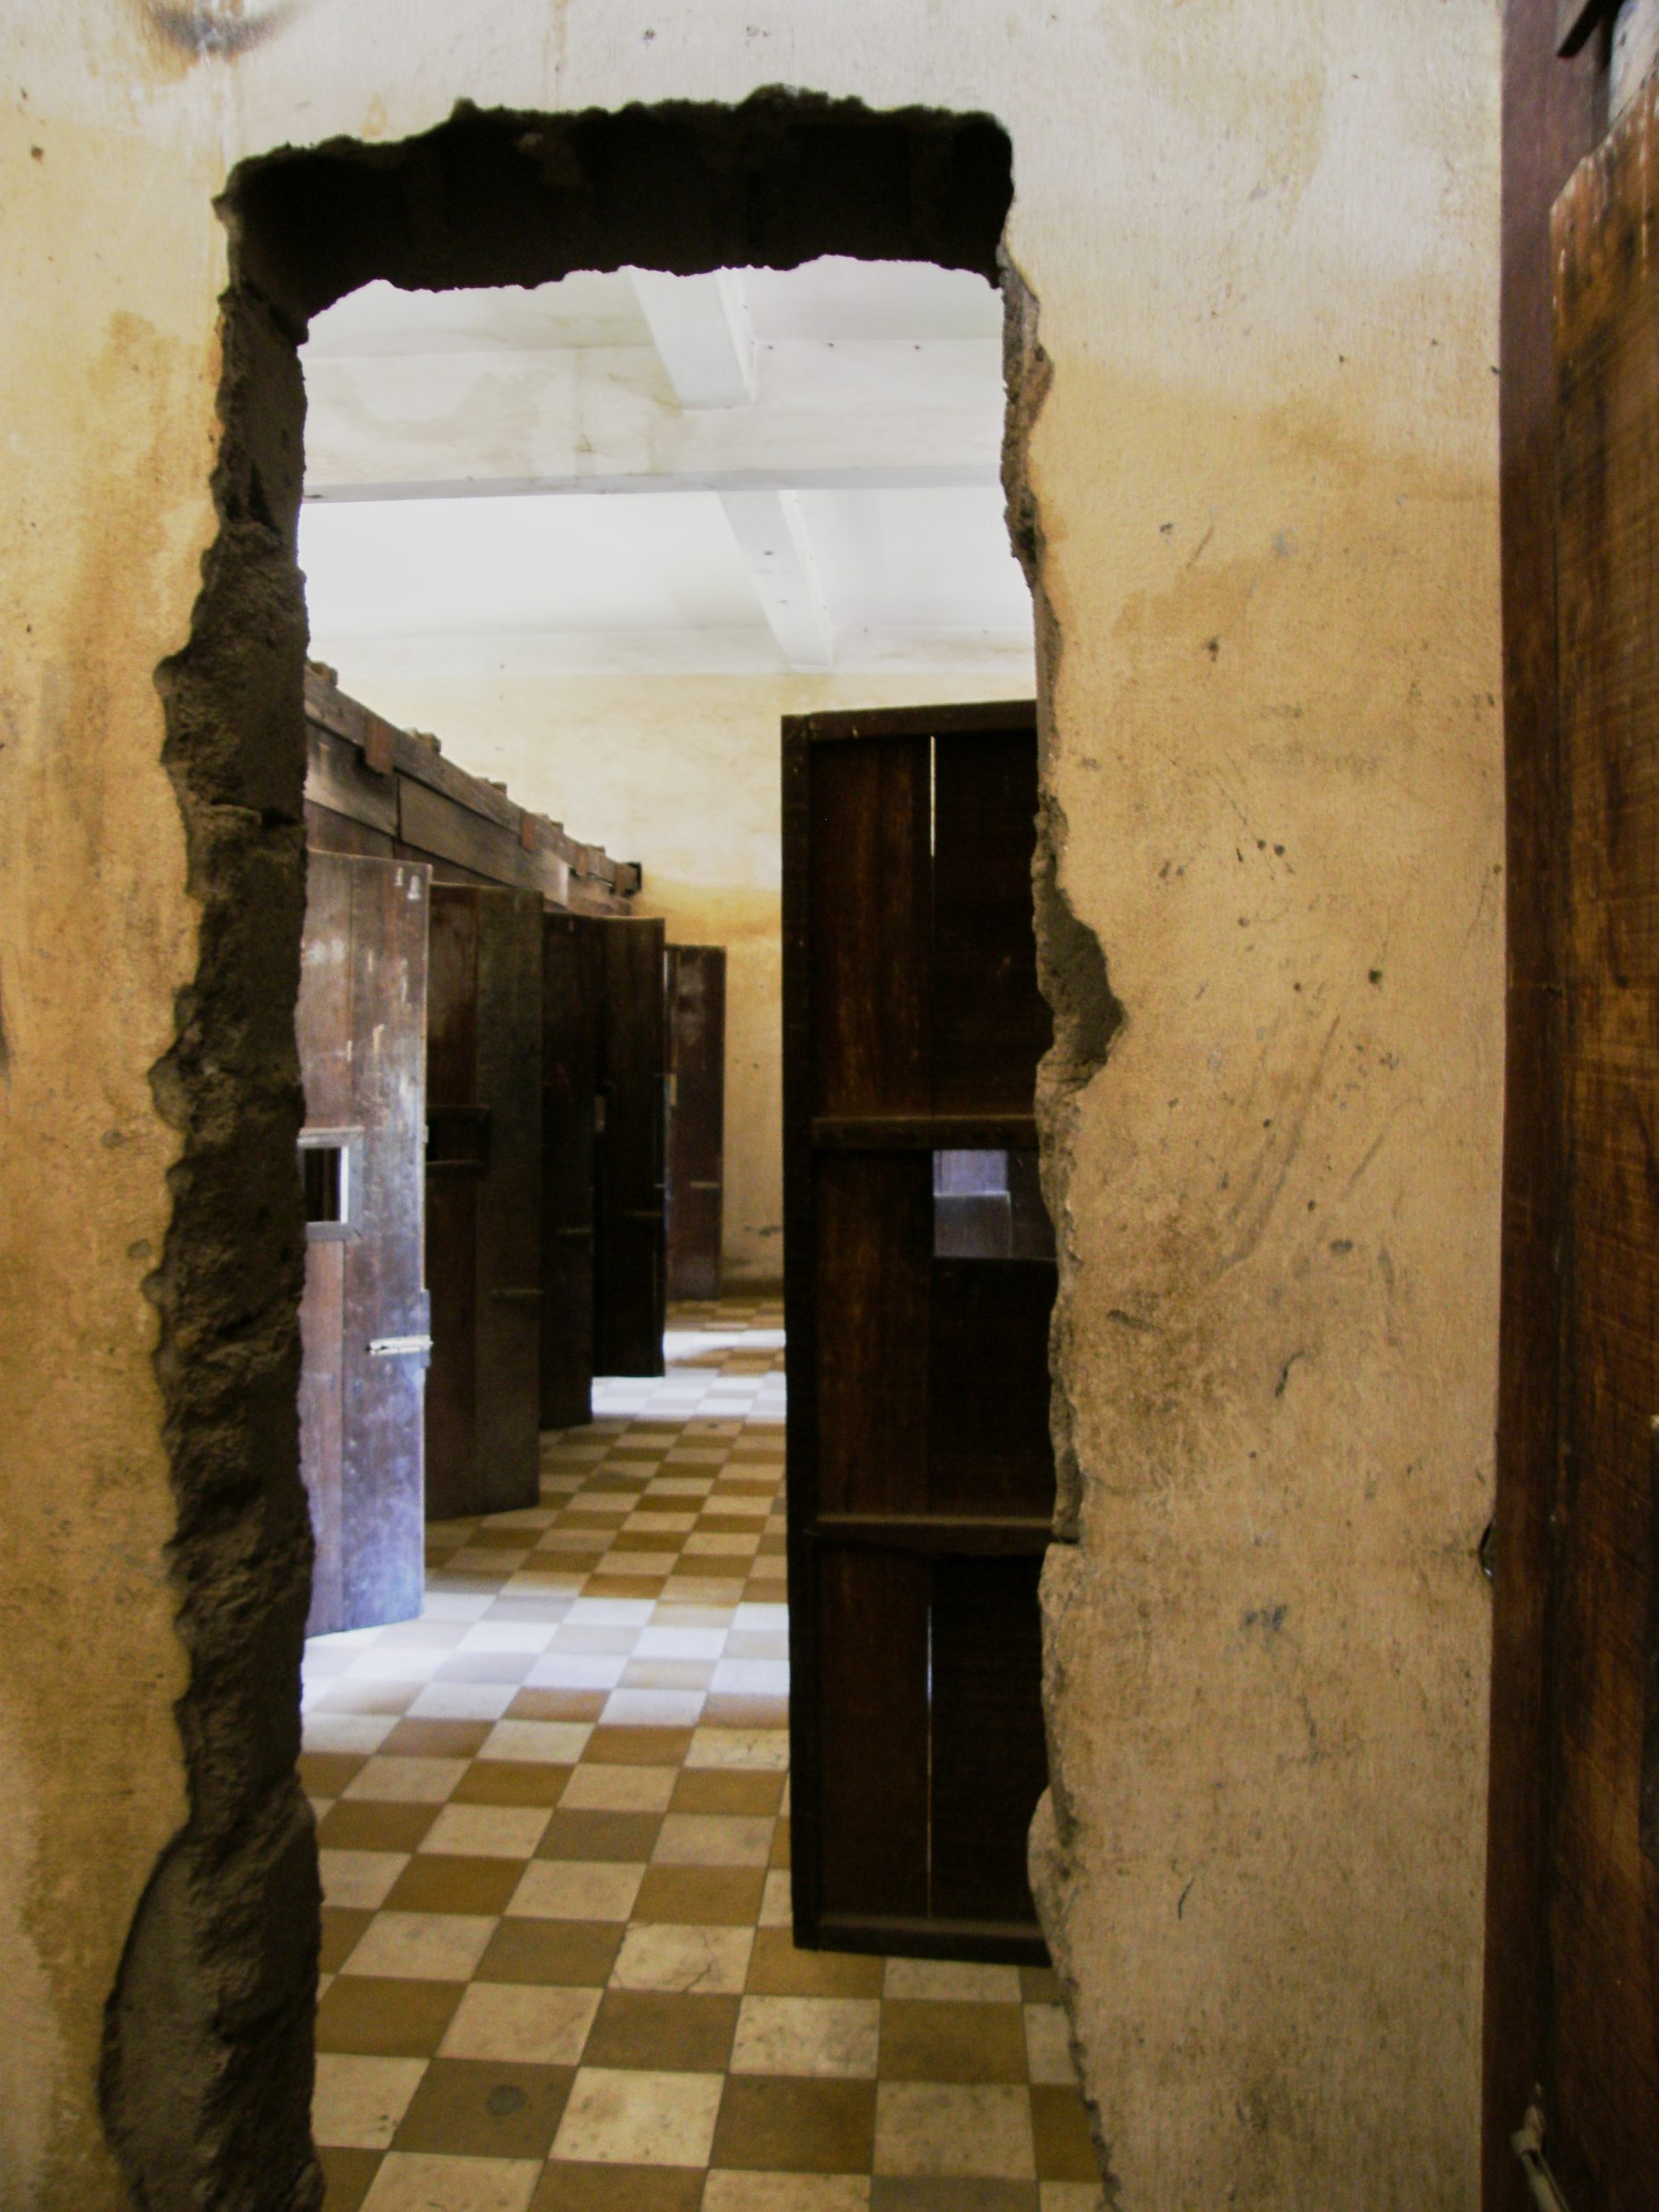 Prison/room doors at Tuol Sleng